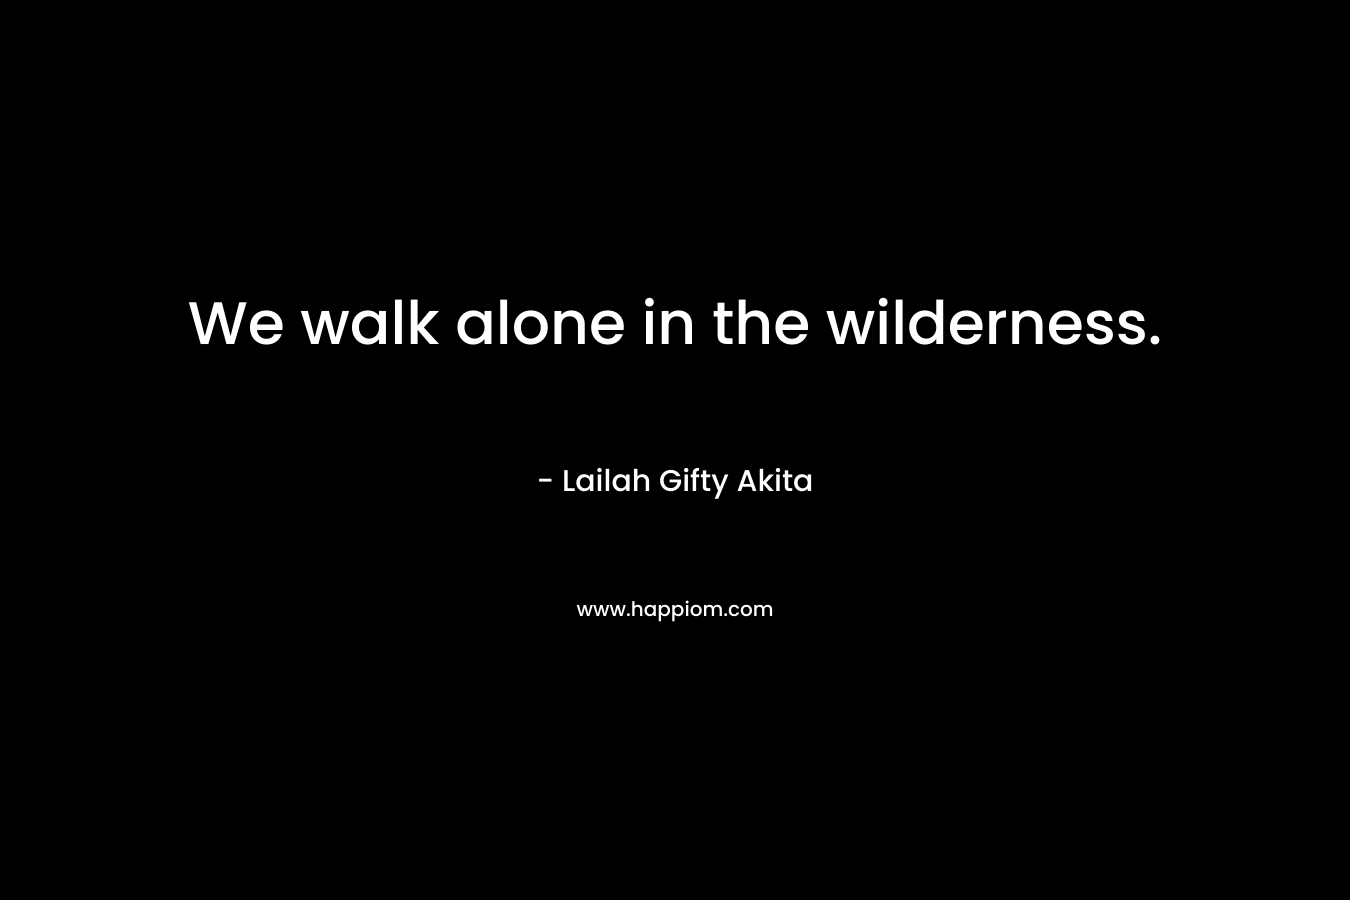 We walk alone in the wilderness.